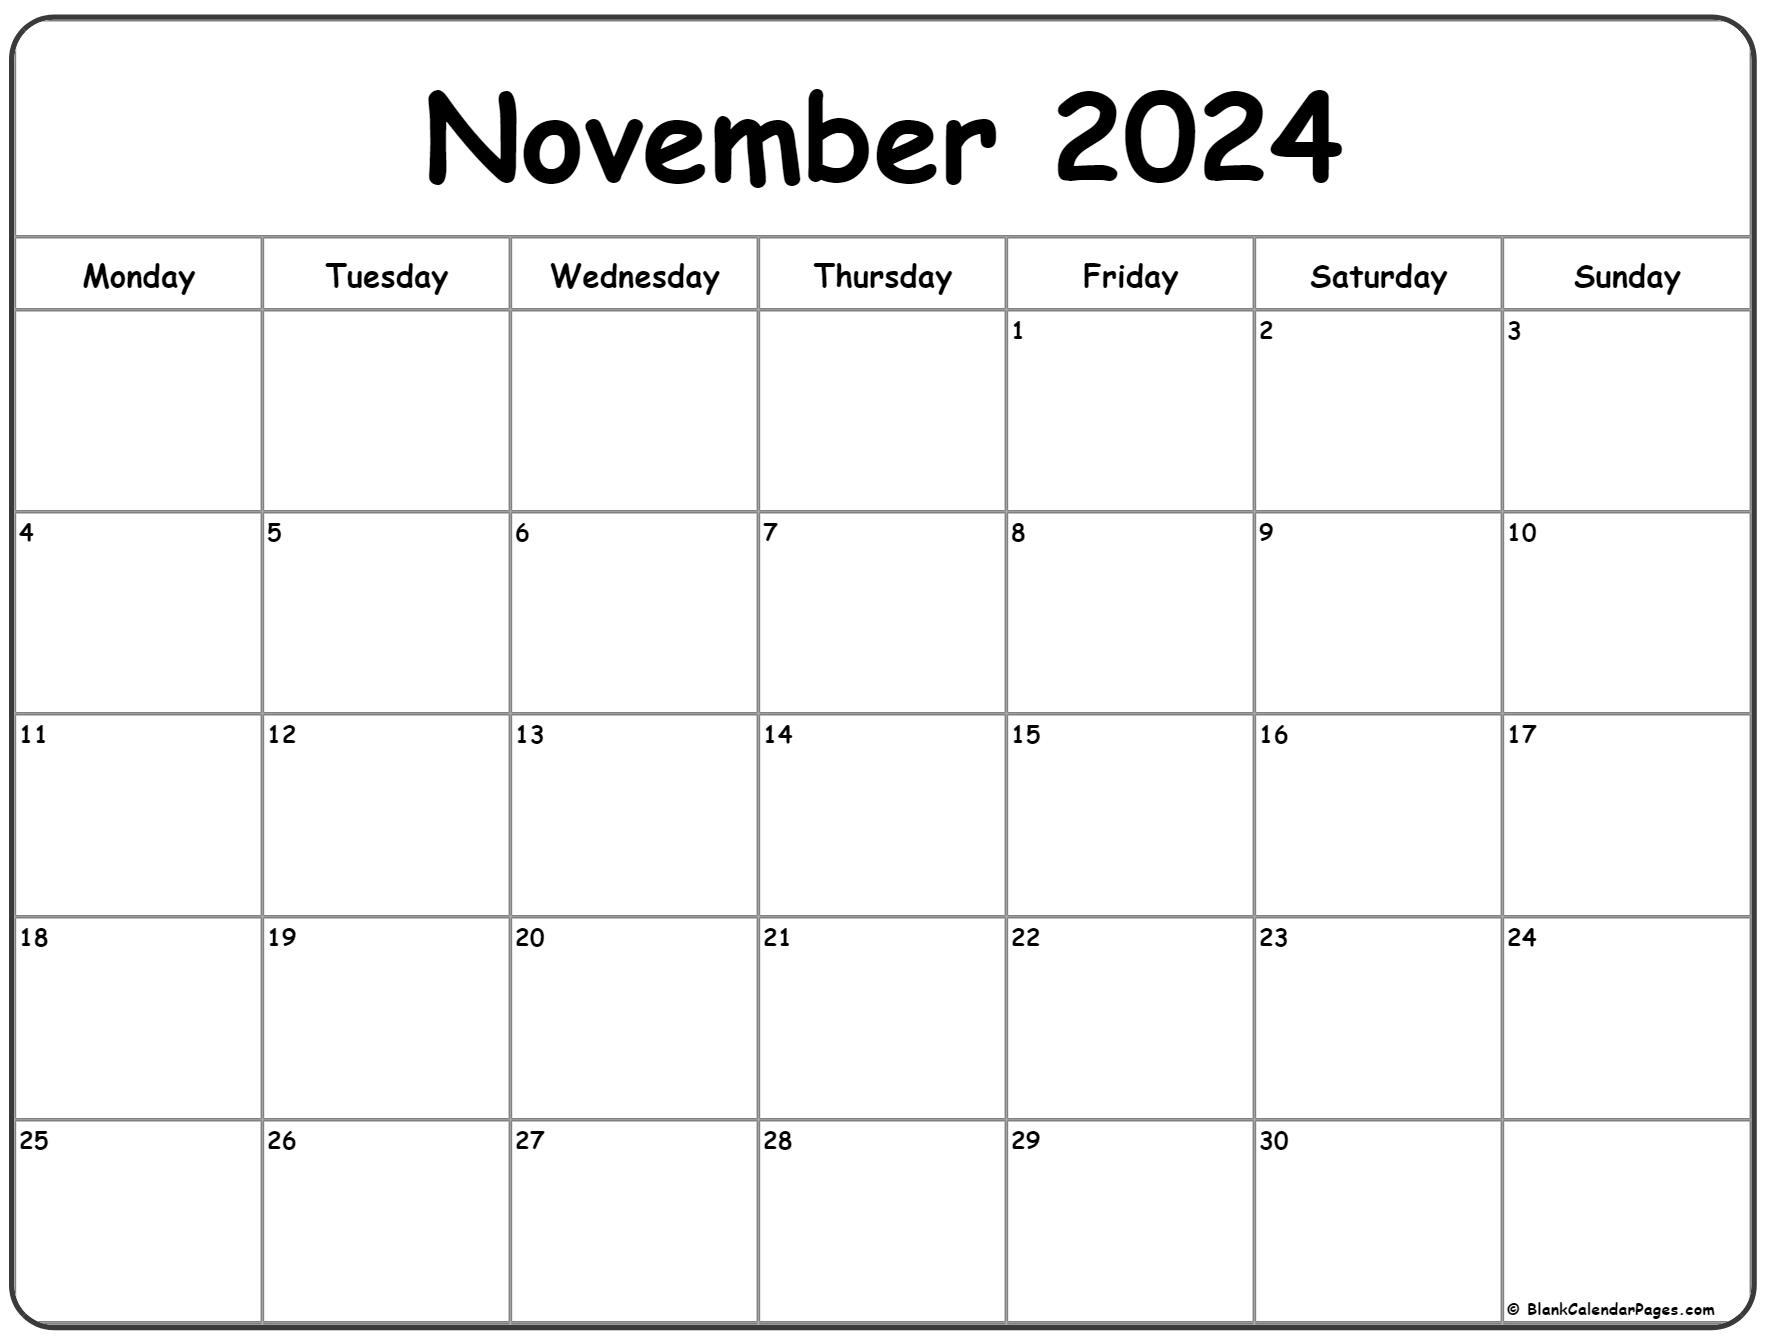 Nov 2022 Calendar With Holidays November 2022 Monday Calendar | Monday To Sunday